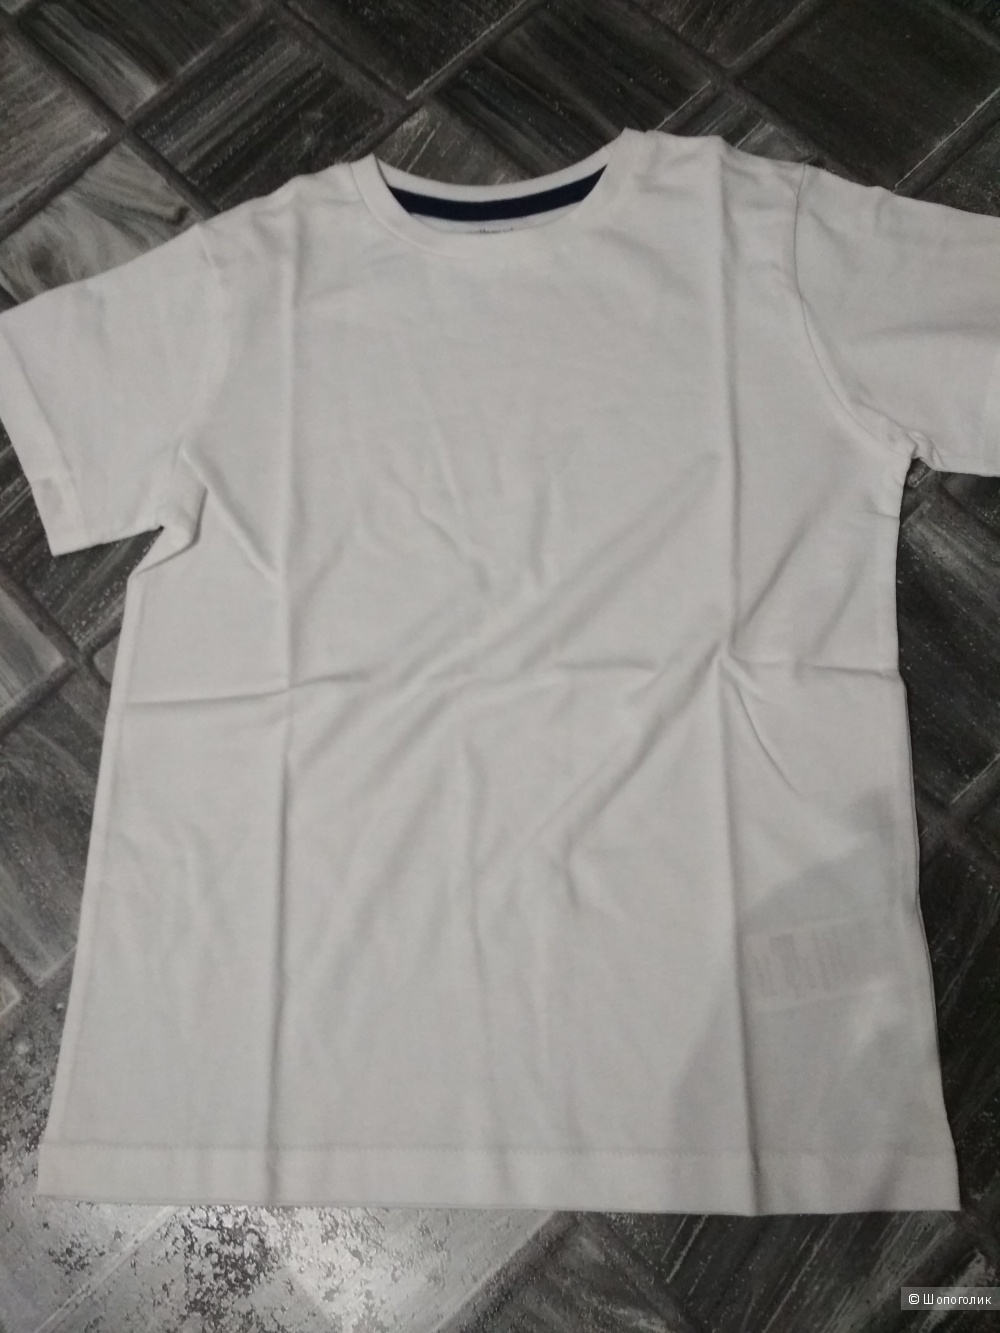 Комплект футболок vertbaudet размер 126